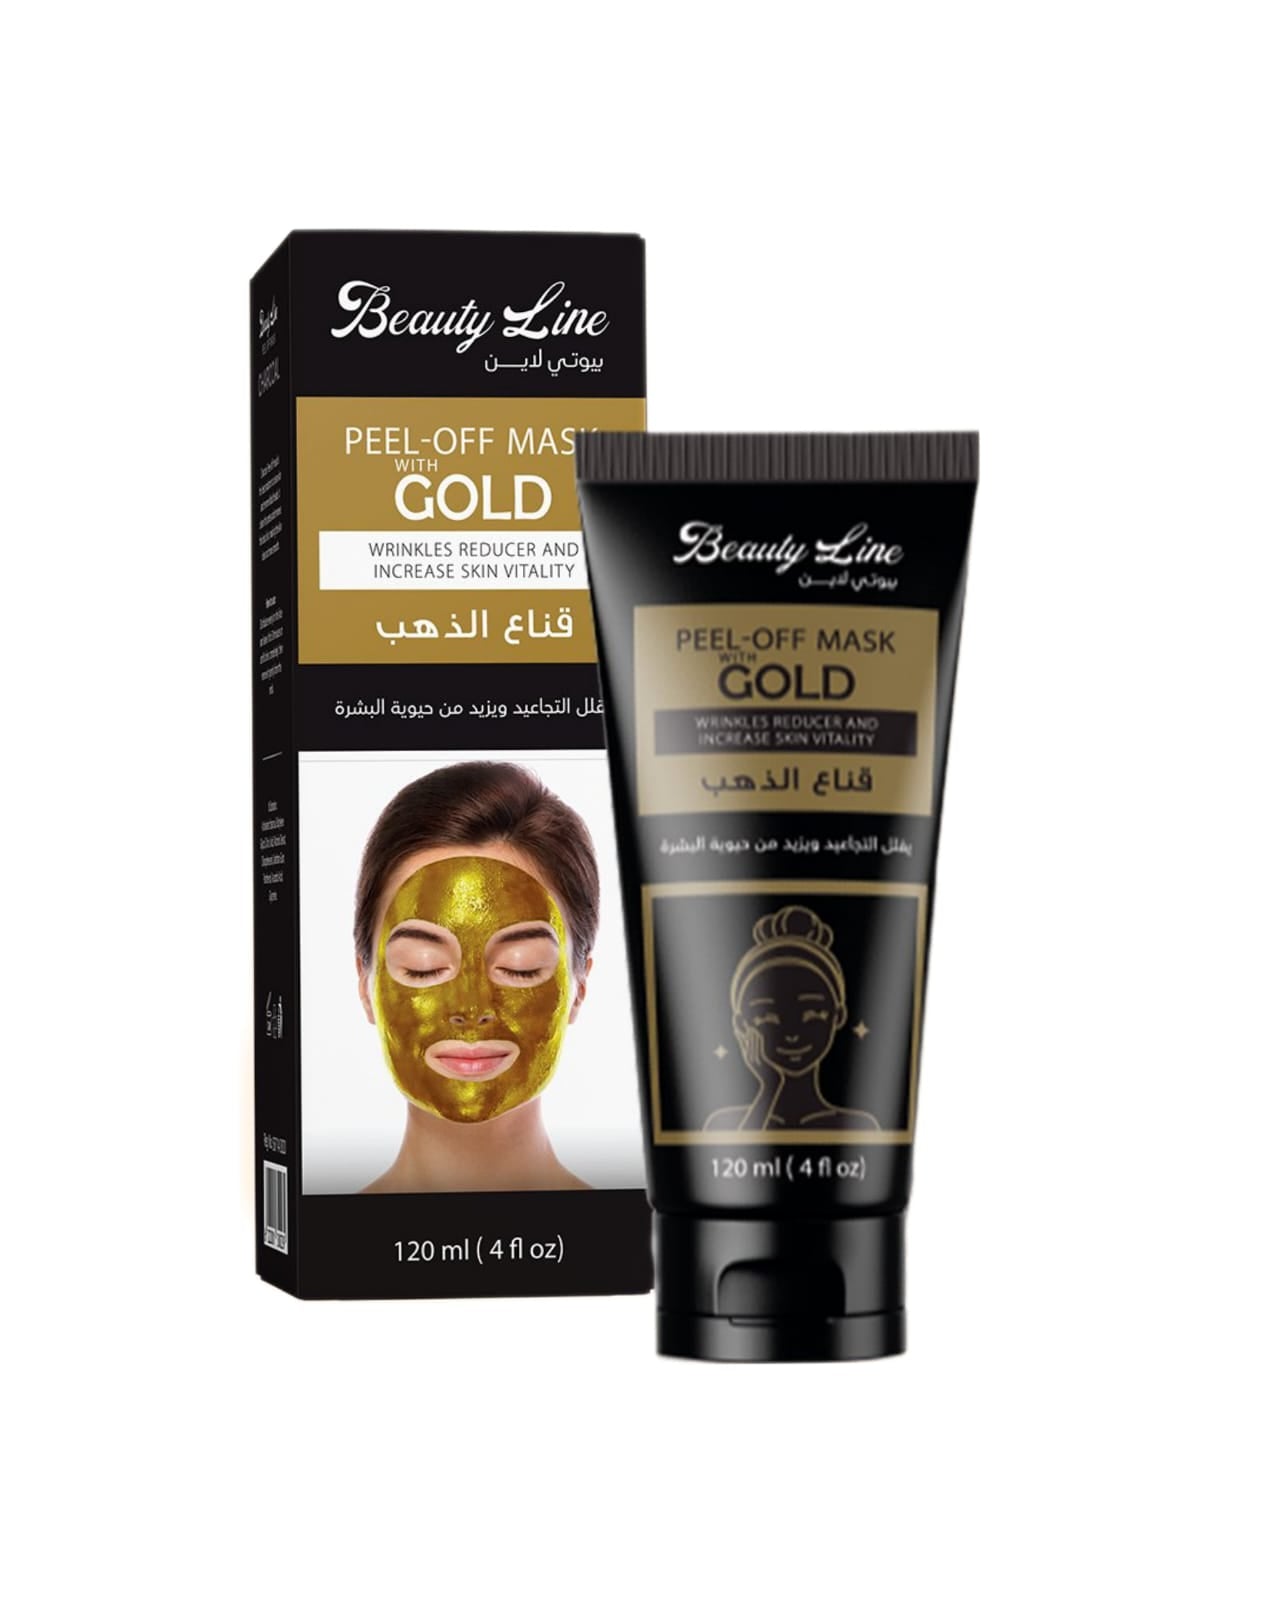 Beauty Line Peel-Off Mask Gold